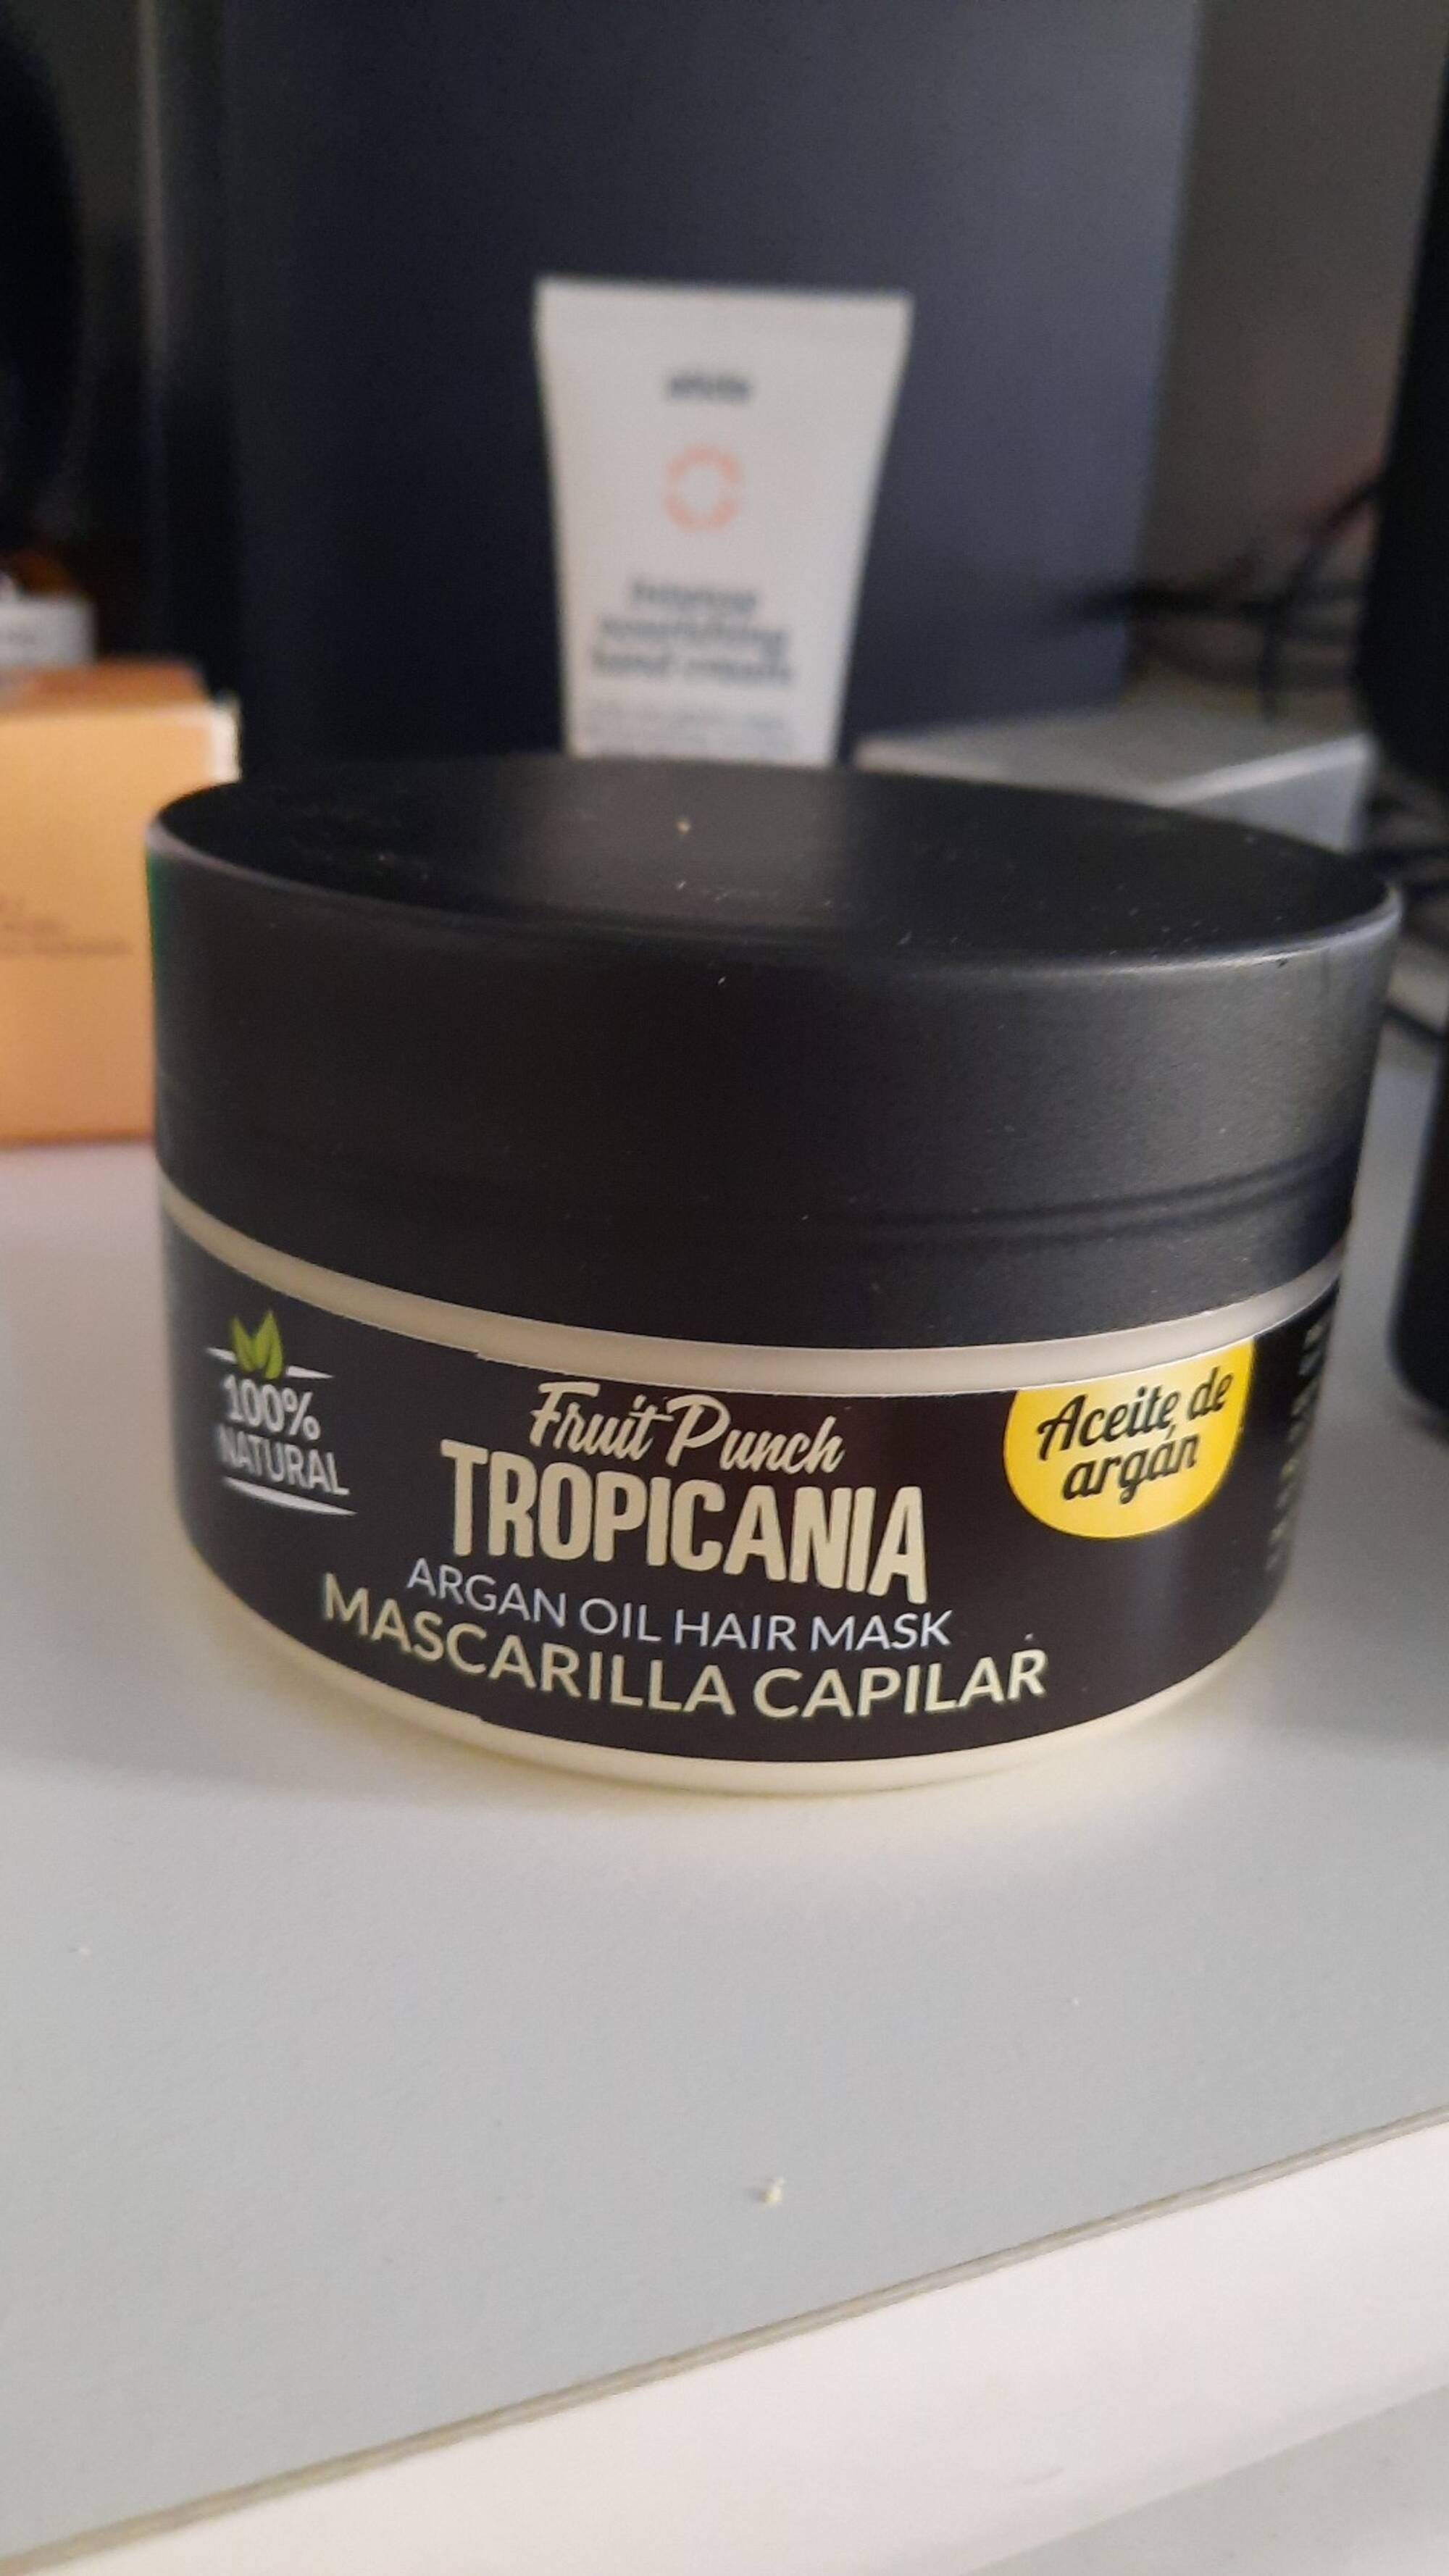 TROPICANIA - Fruit punch - Argan oil hair mask